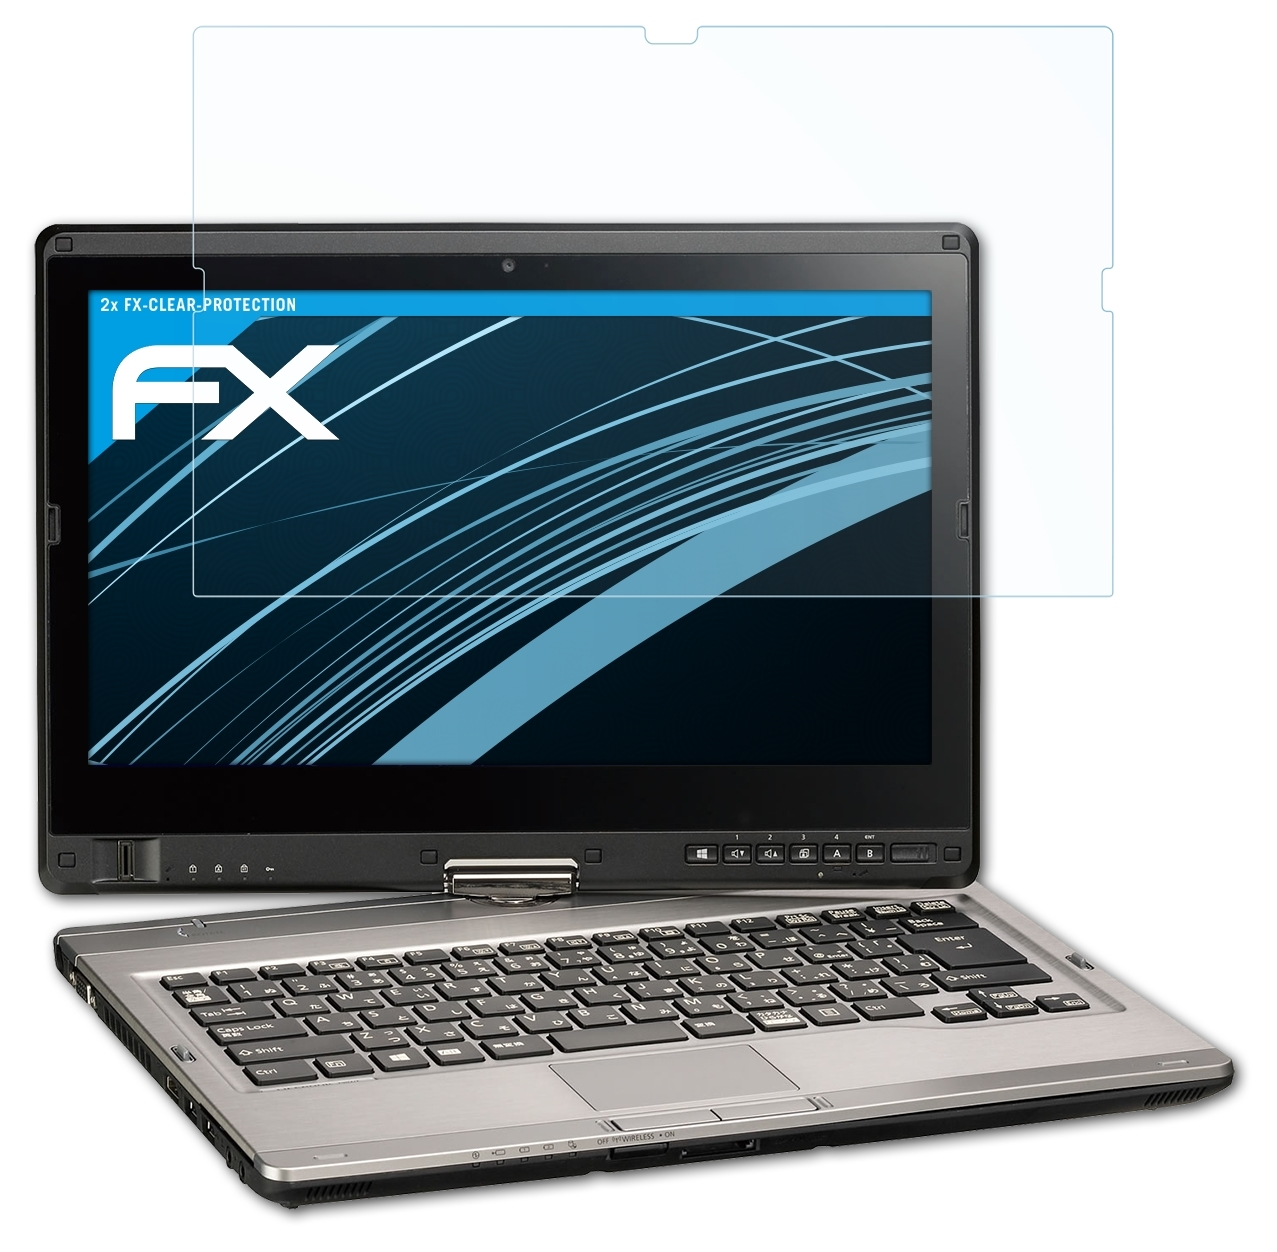 Lifebook 2x ATFOLIX Displayschutz(für T902) FX-Clear Fujitsu